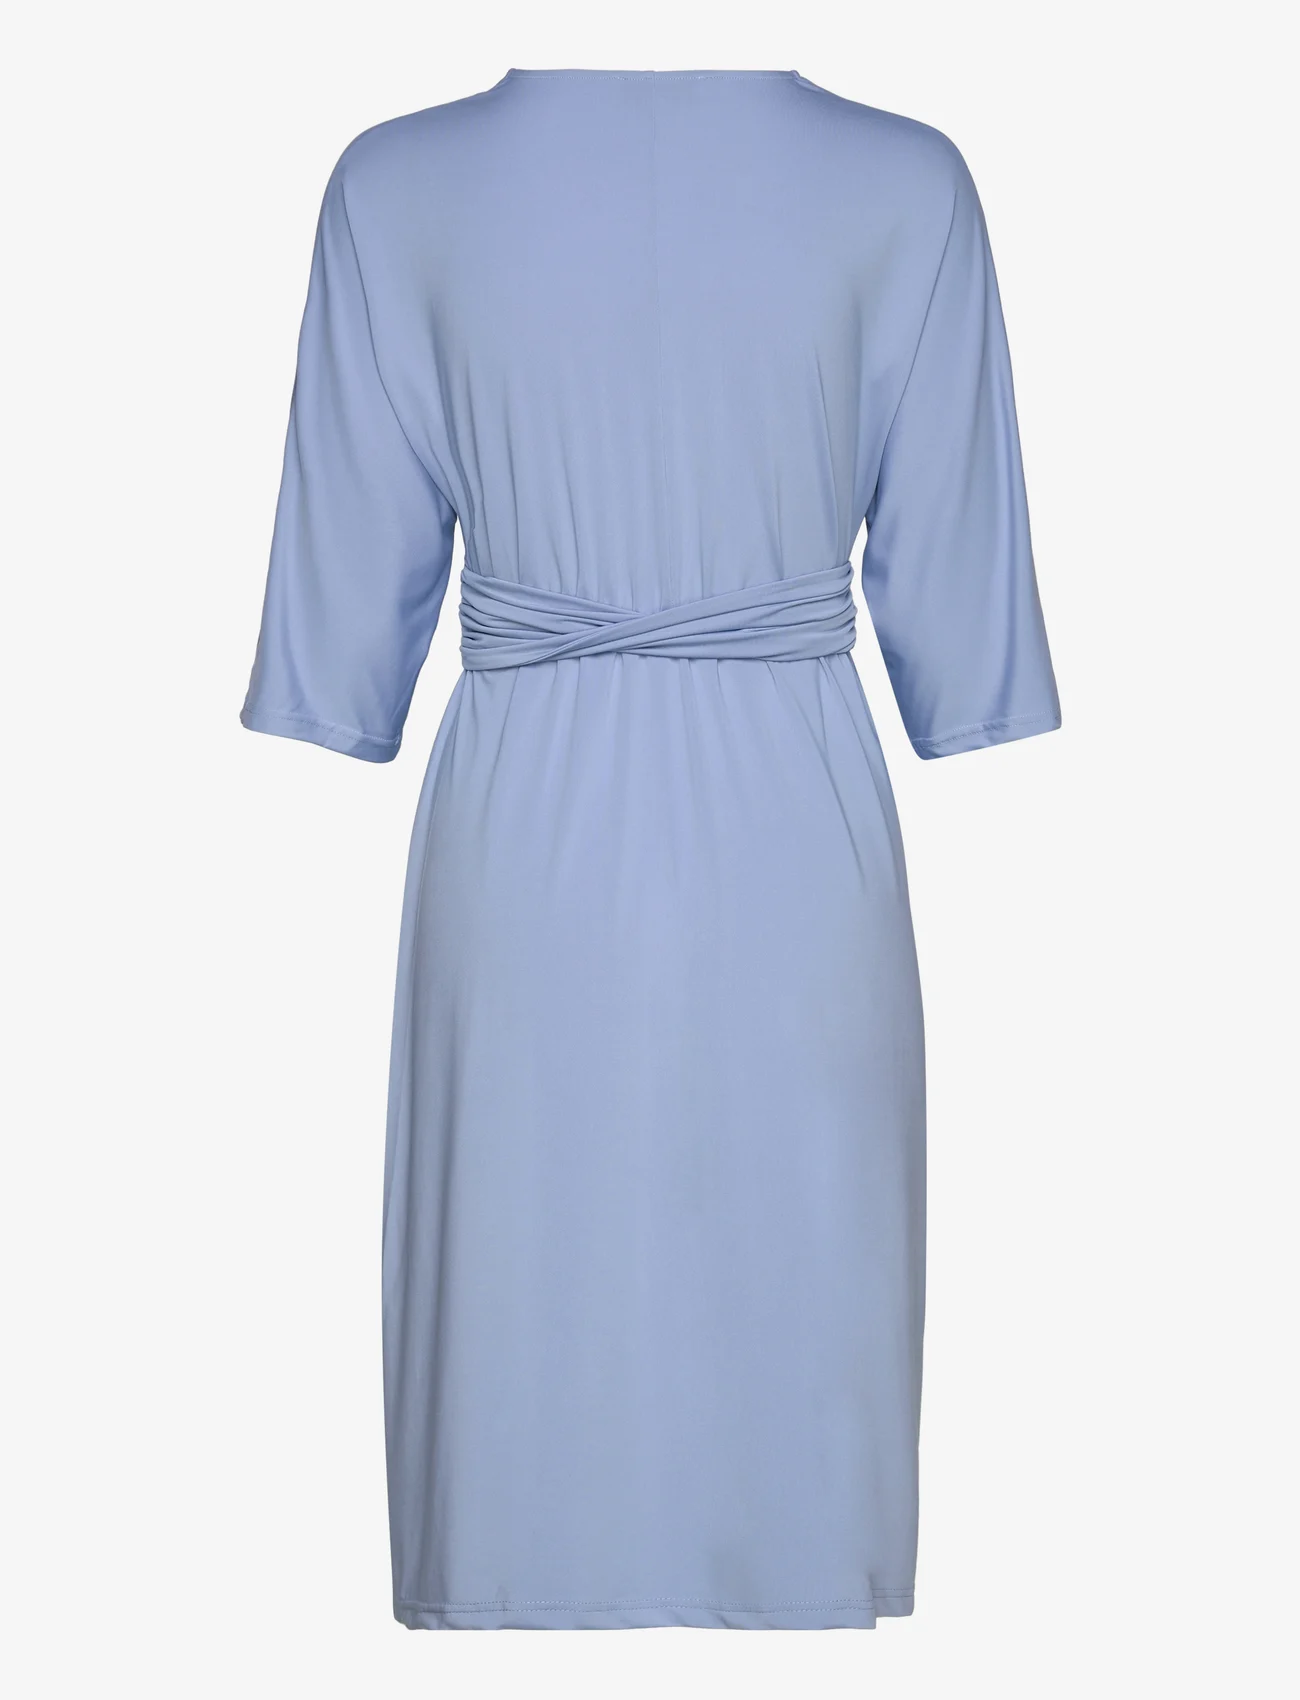 Rosemunde - Dress - midi dresses - blue allure - 1